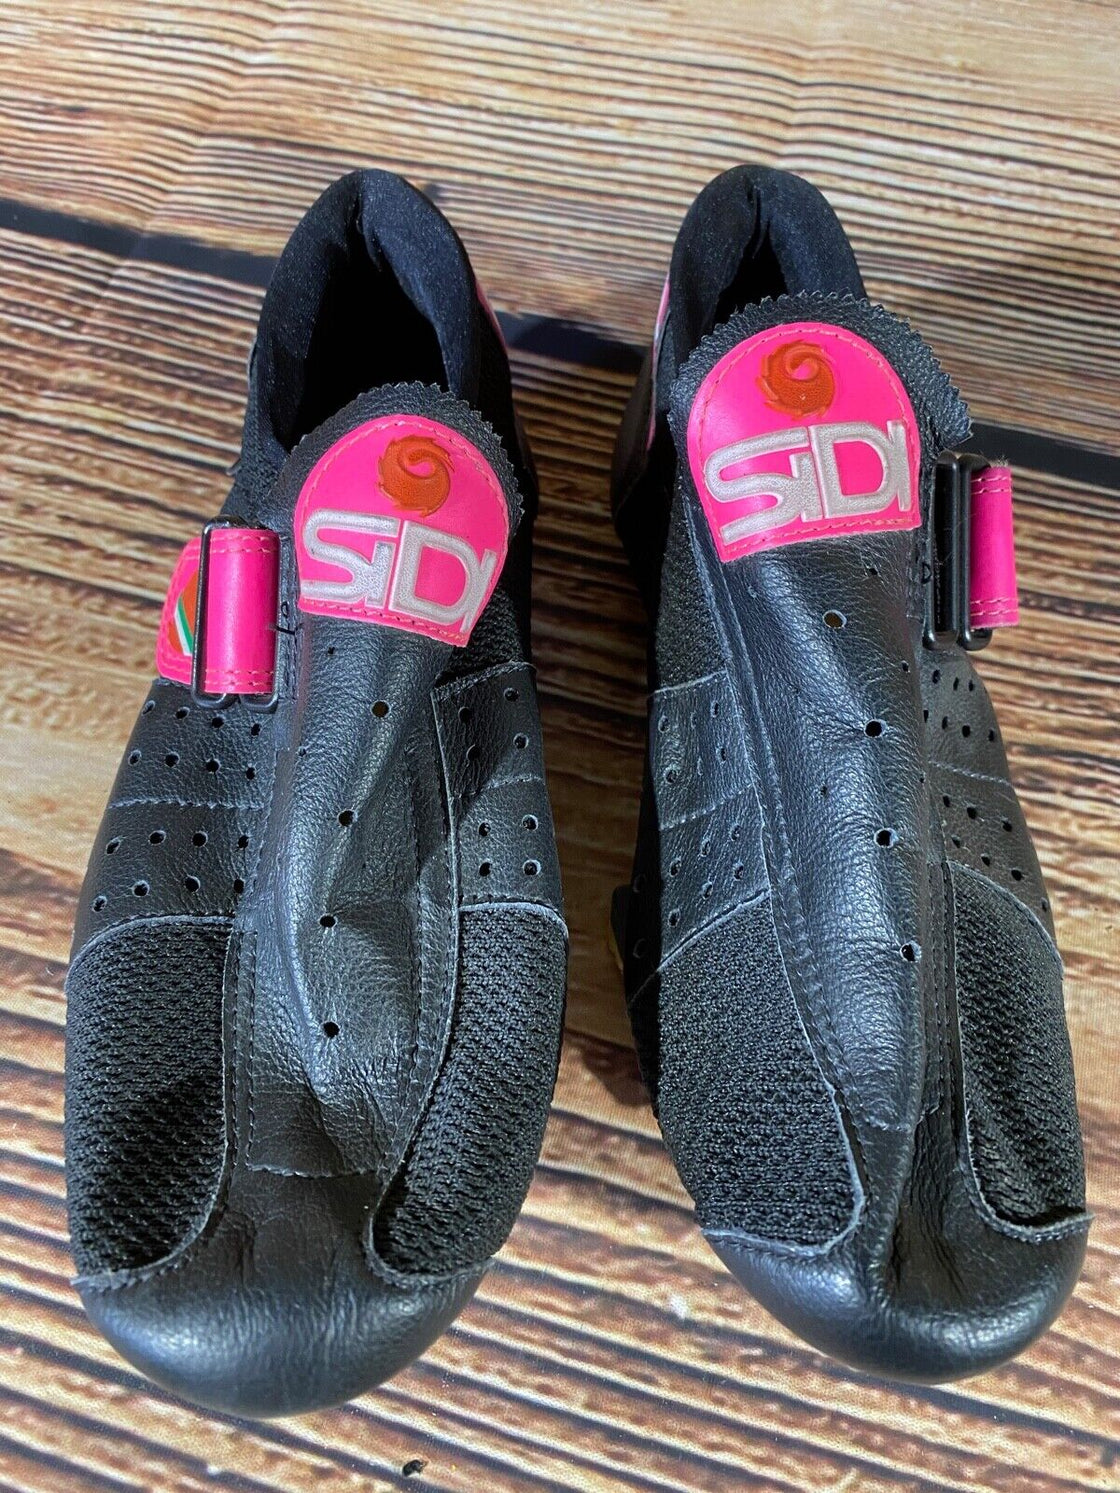 SIDI Vintage Road Cycling Shoes Biking Boots Size EU38, US5, Mondo 228 RARE